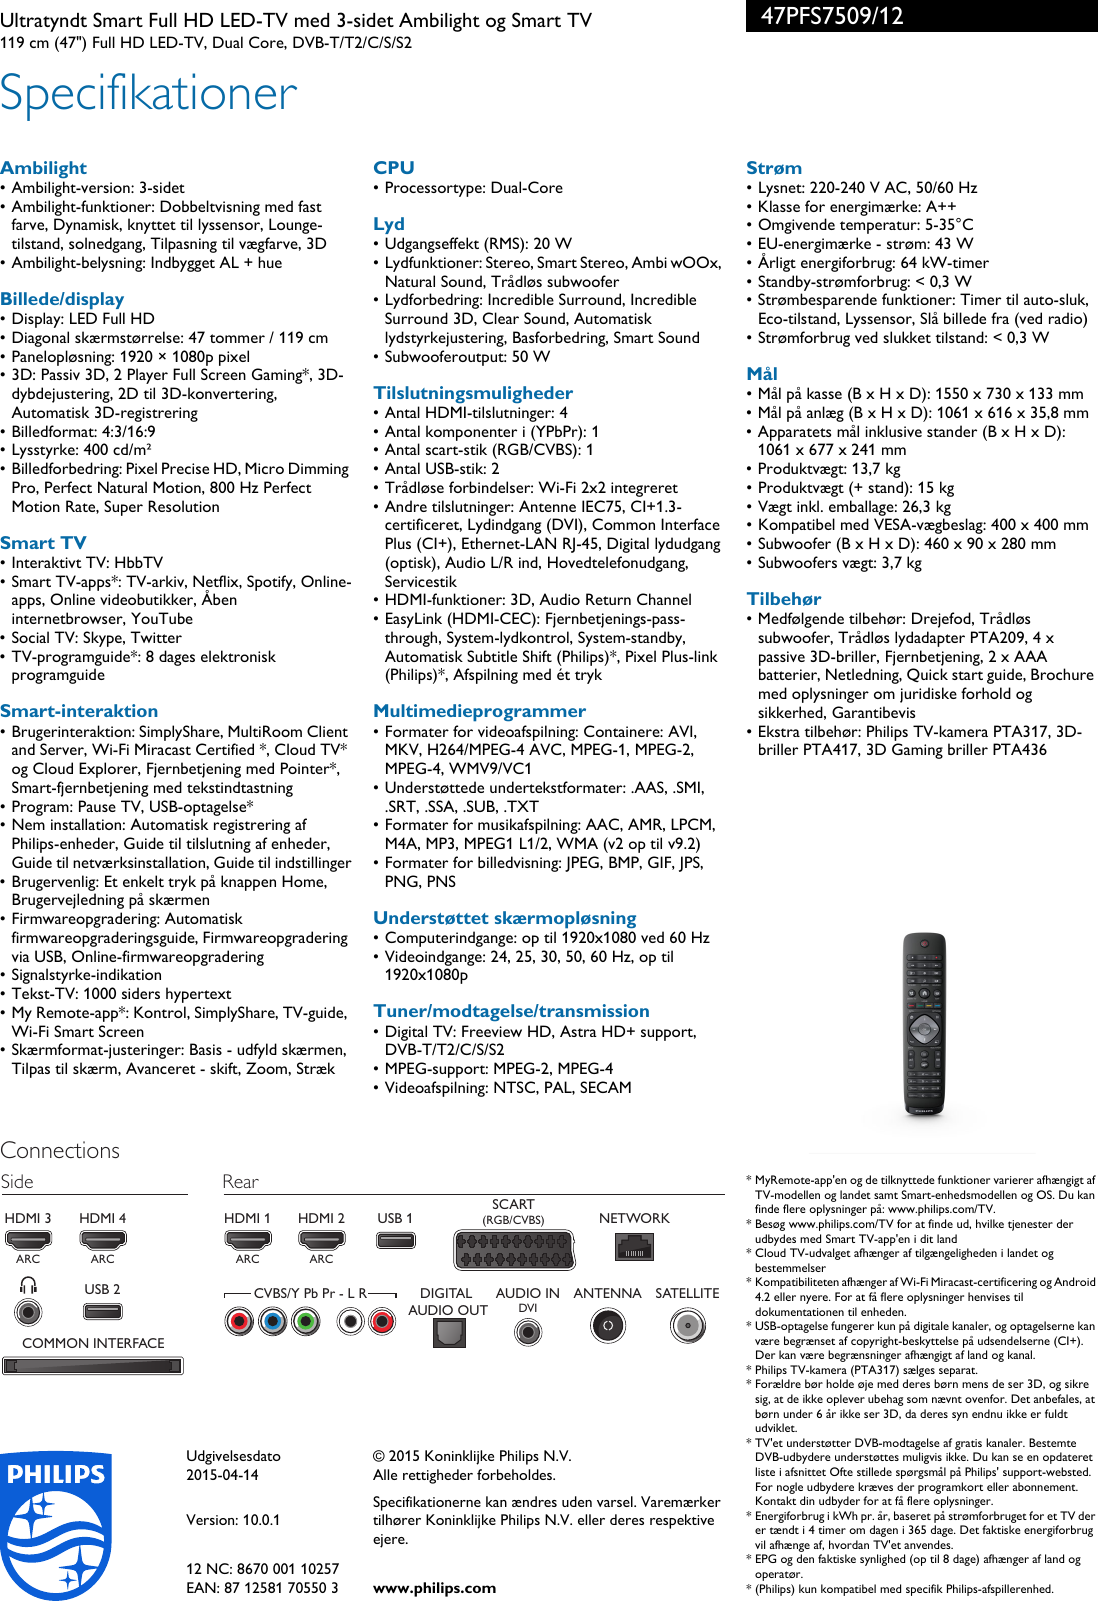 Page 3 of 3 - Philips 47PFS7509/12 Ultratyndt Smart Full HD LED-TV Med 3-sidet Ambilight Og TV User Manual  47pfs7509 12 Pss Dandk